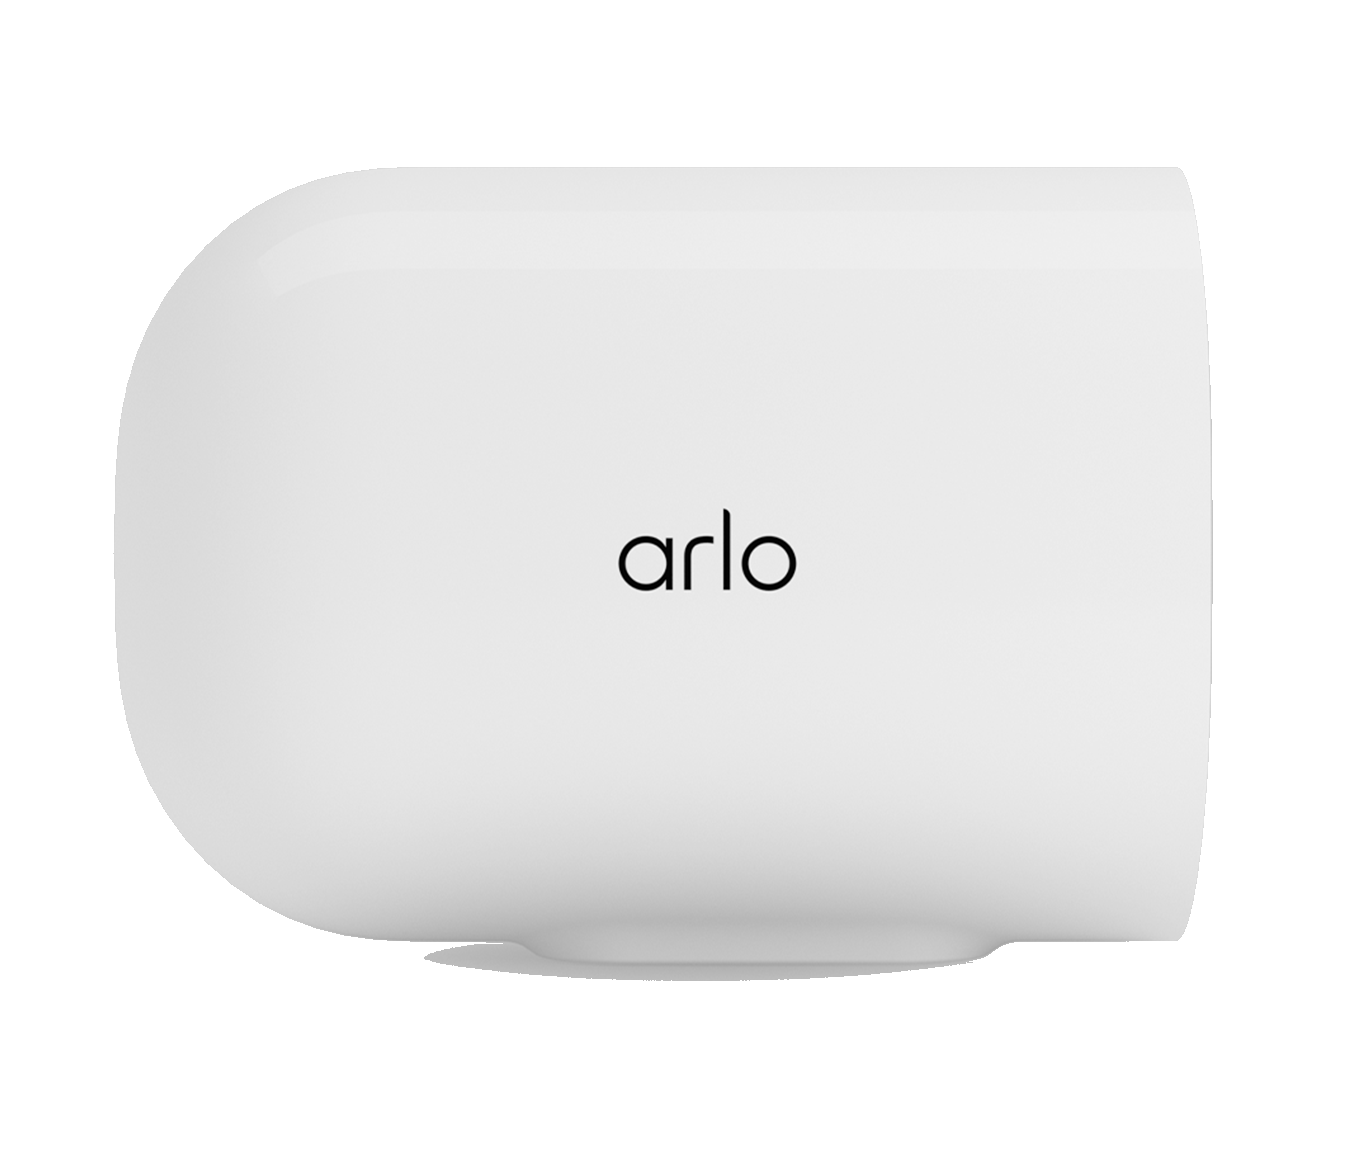 Arlo Go 2 LTE / Wi-Fi  <br>無線安全攝影機 <br>VML2030